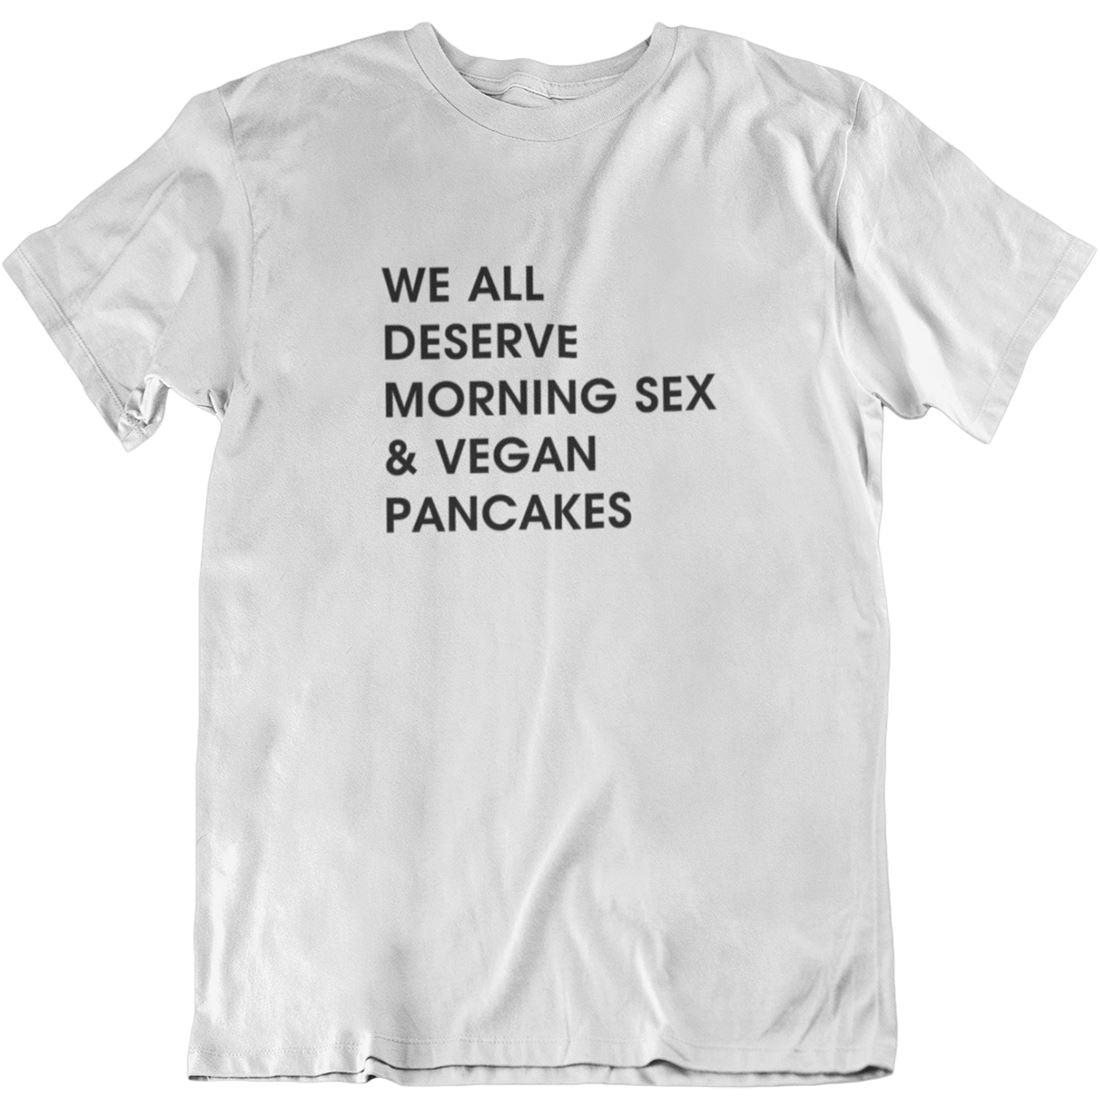 We all deserve morning sex & vegan pancakes - Unisex Organic Shirt - Team Vegan © vegan t shirt